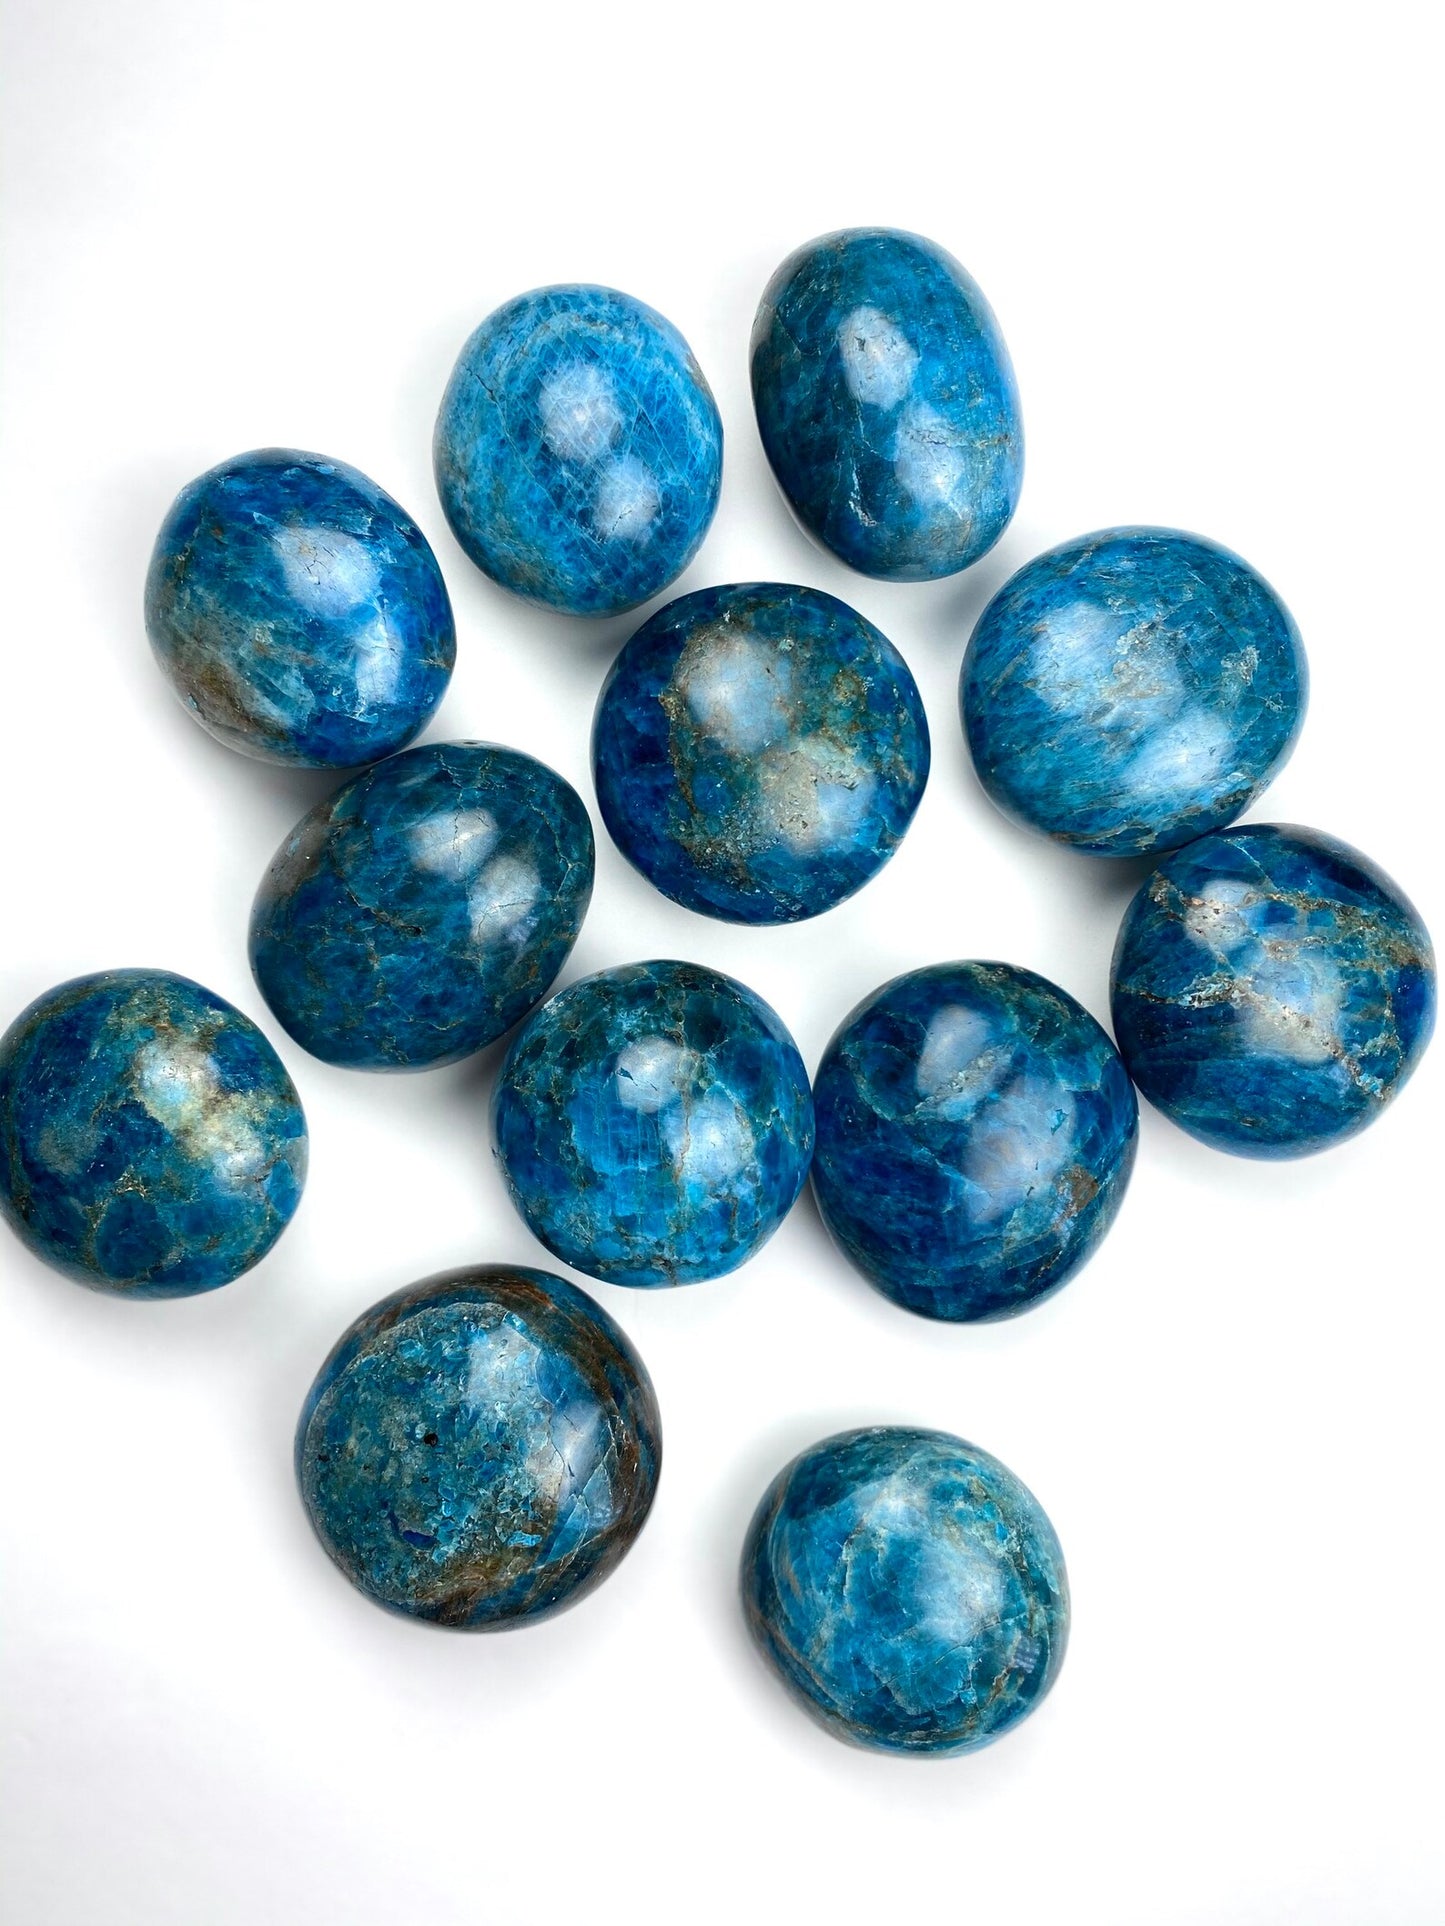 Blue Apatite - Palm Stone